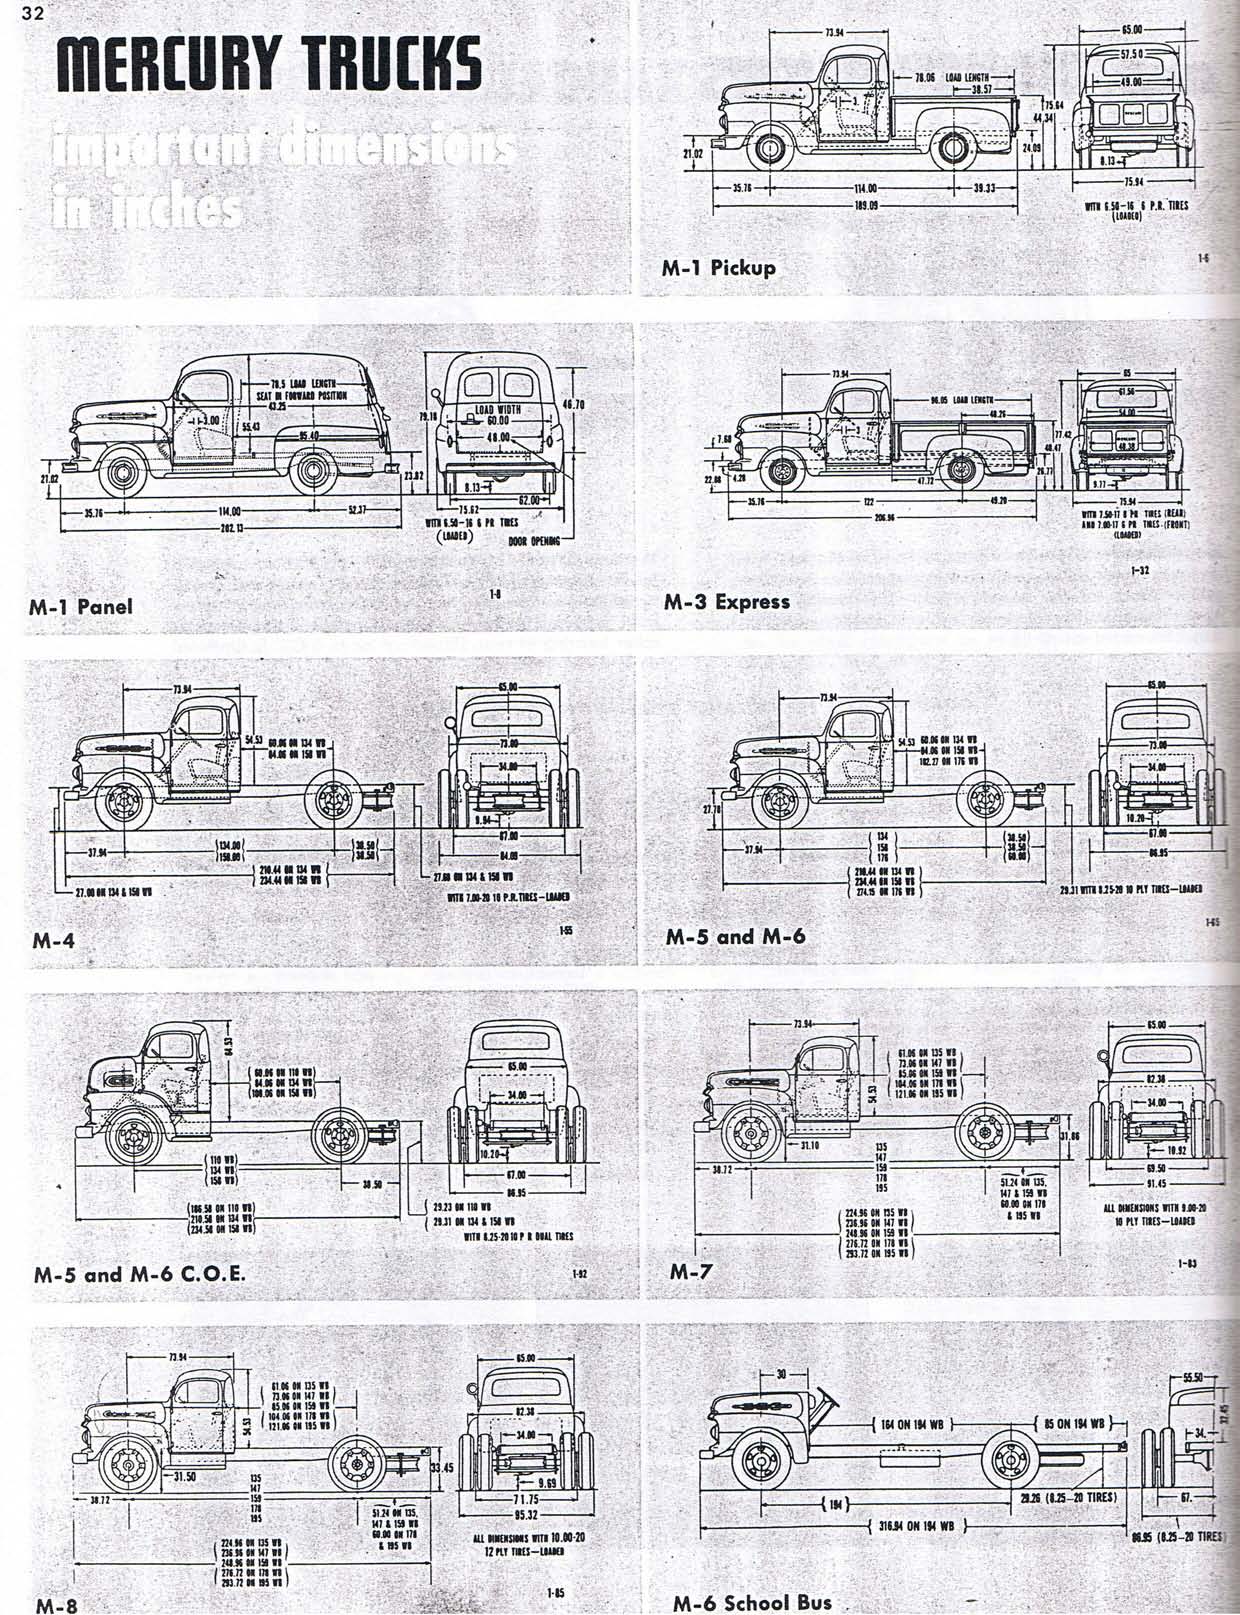 1951_Mercury_Truck_Page_32